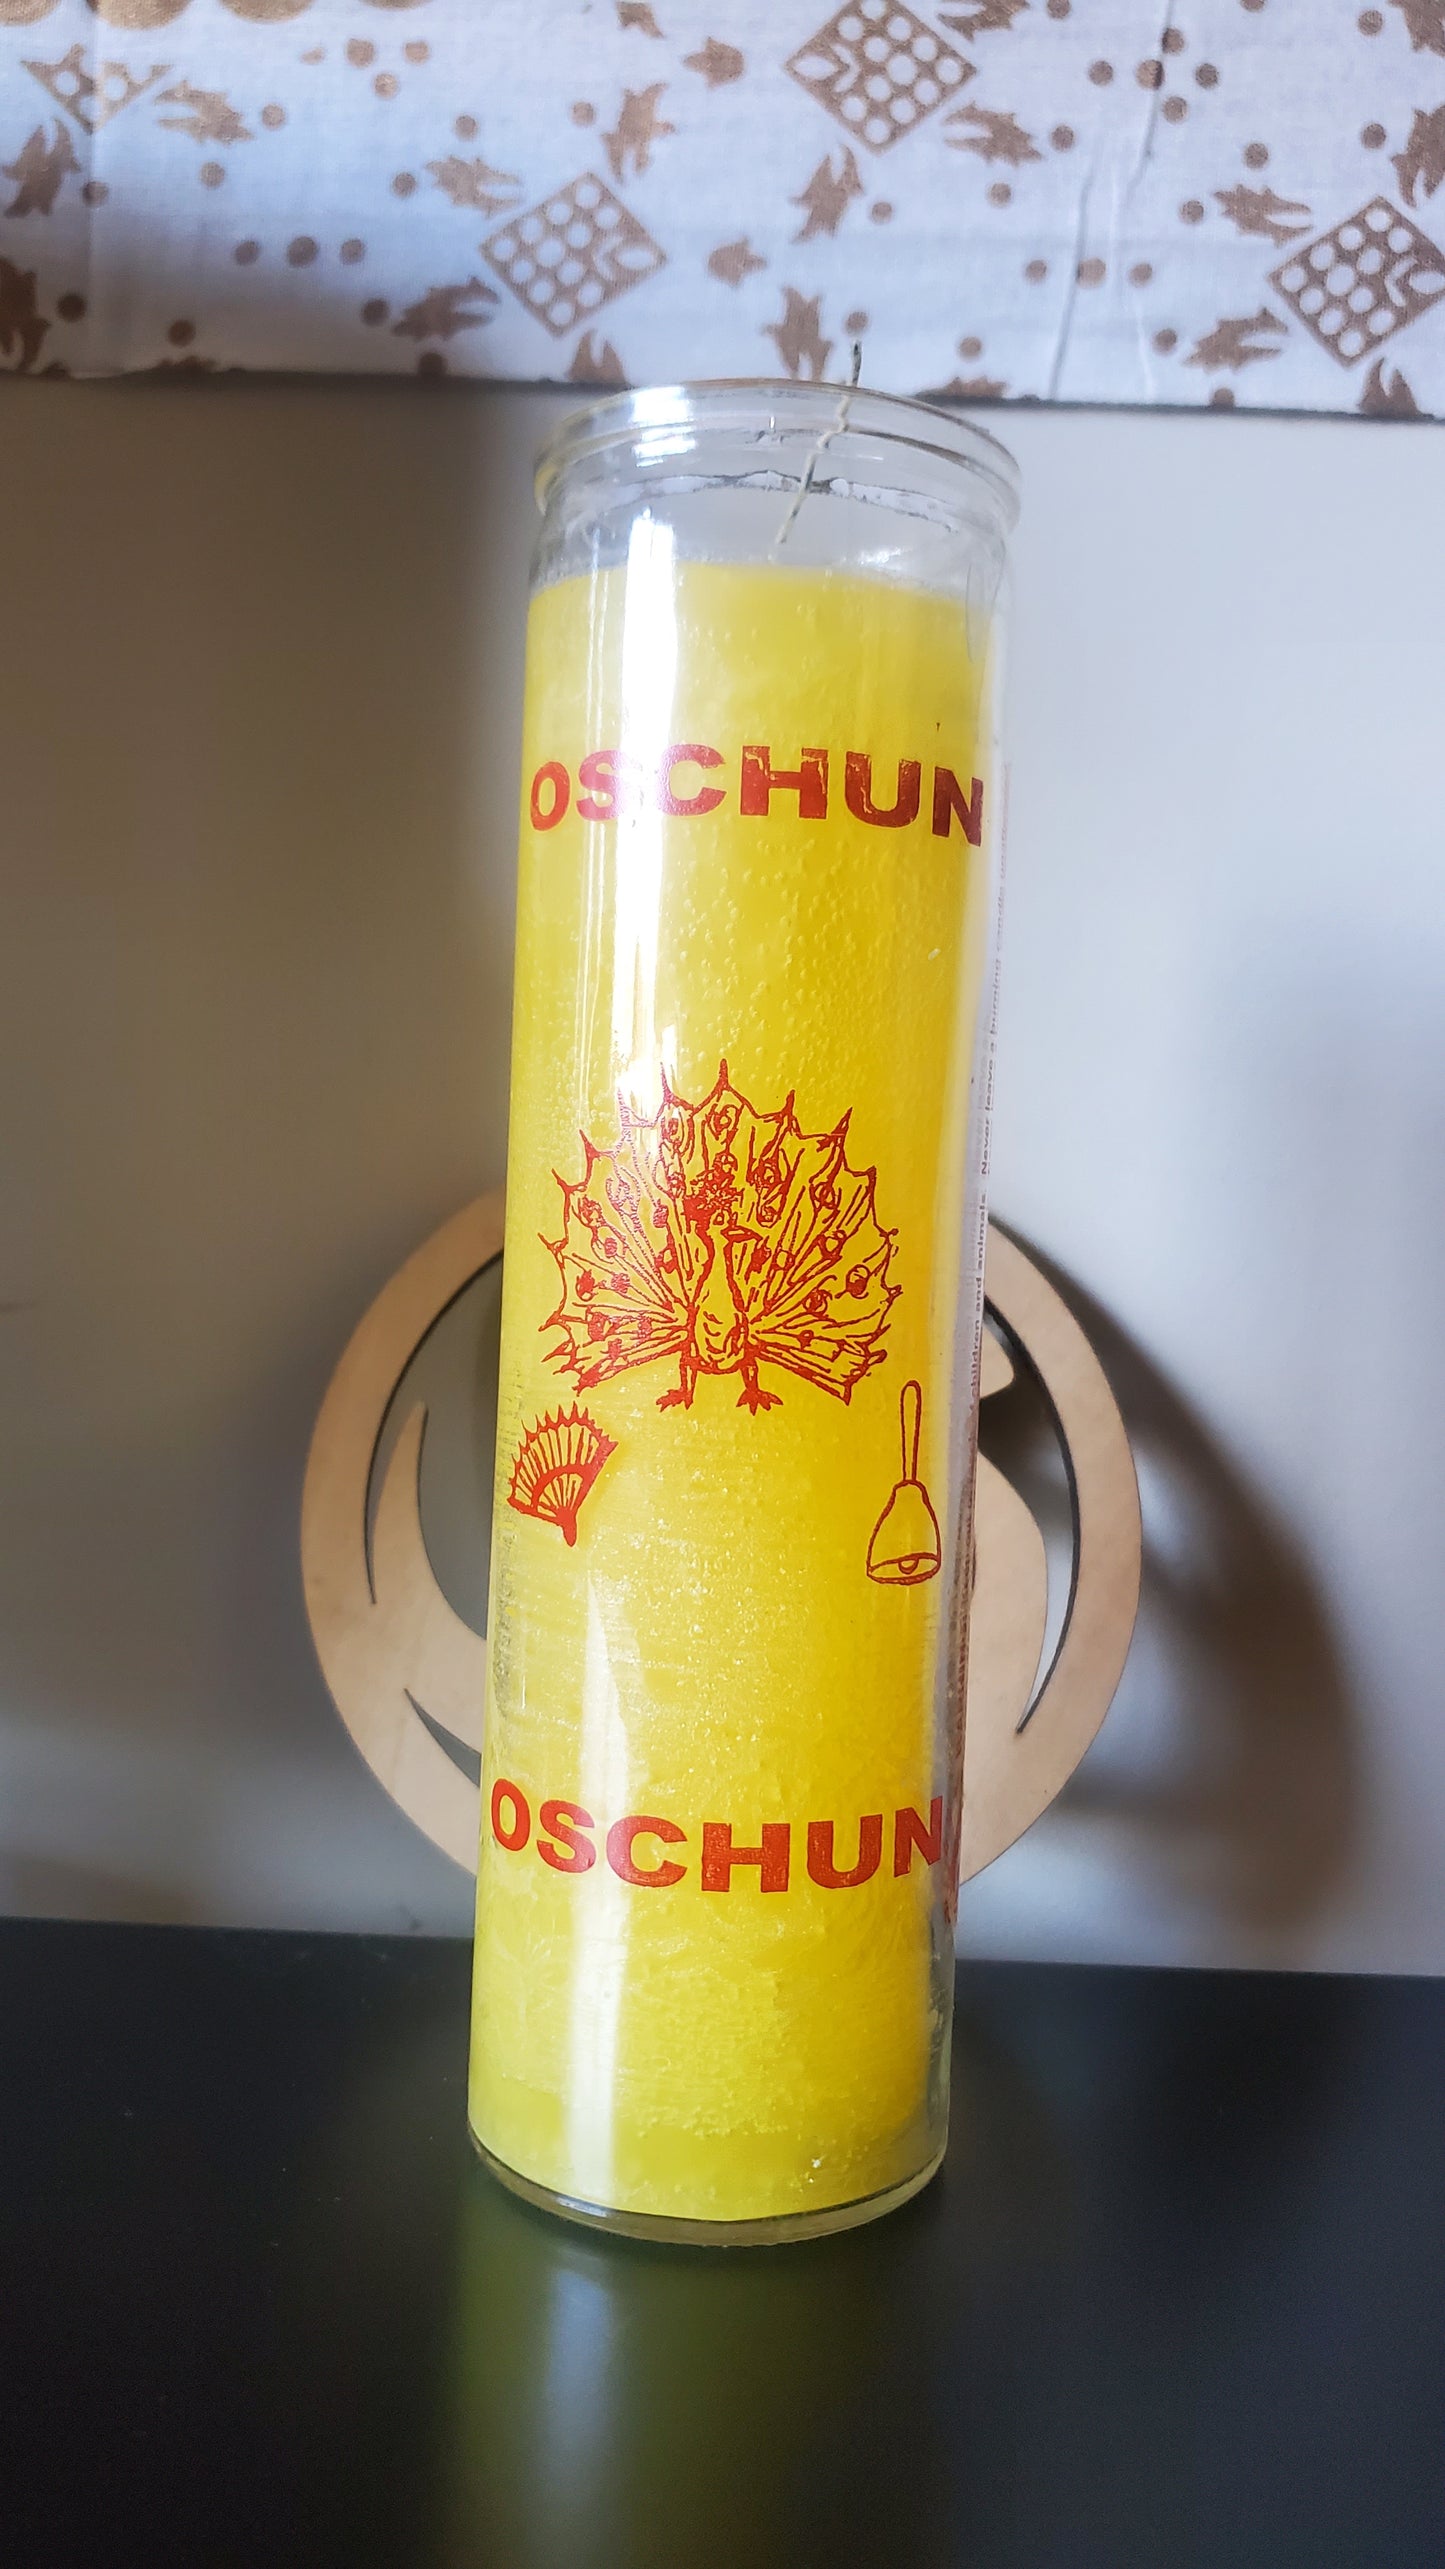 Oshun Candle #Orisha #Orisa #7AfricanPowers Candle [Recommended for Root Conjurers] #Hoodoo #LoveandSuccess #Oshun #Orisha